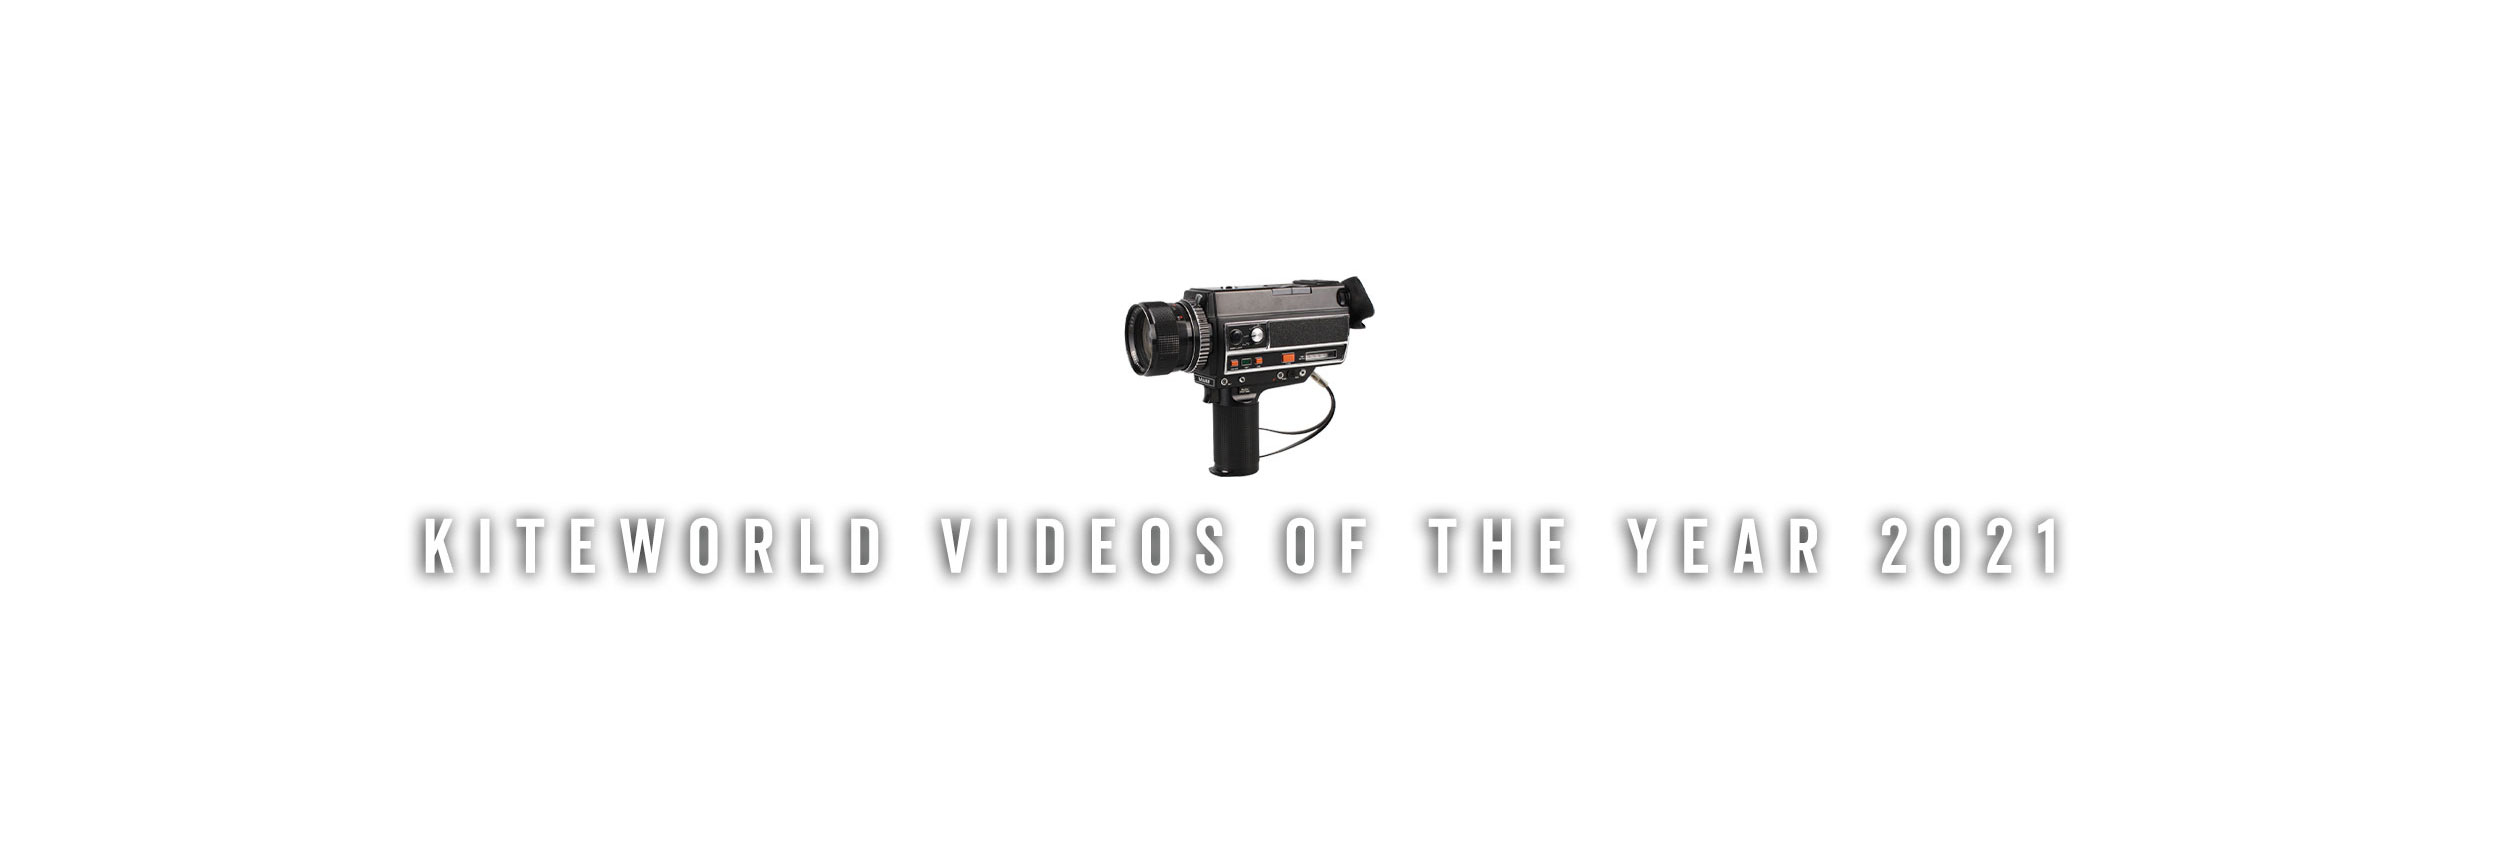 Kiteworld Videos of the Year 2021